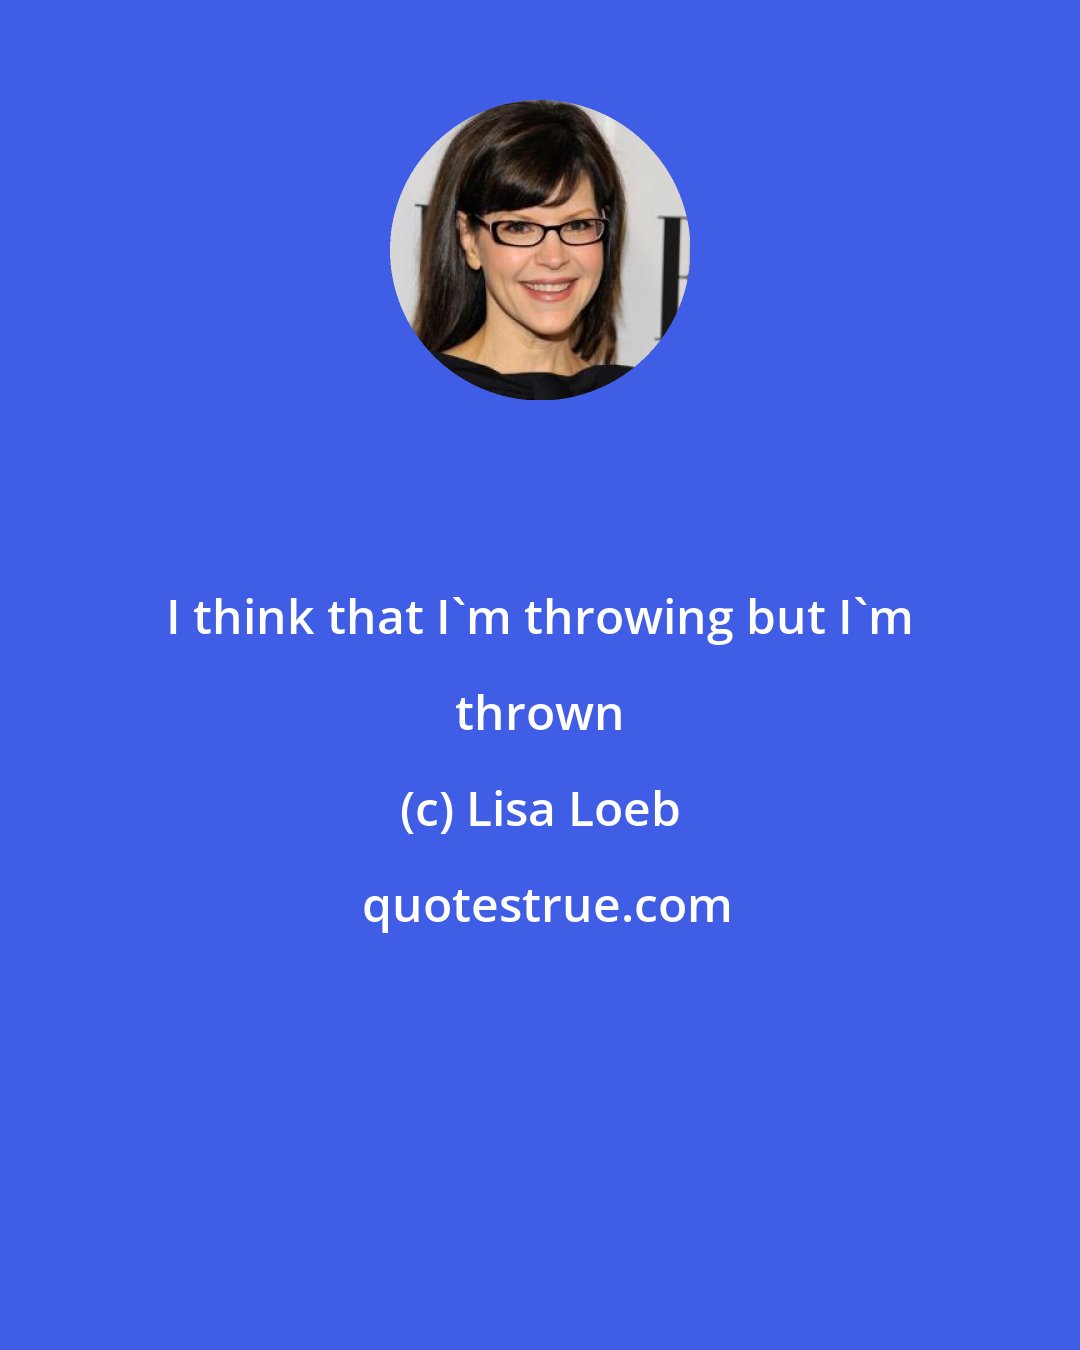 Lisa Loeb: I think that I'm throwing but I'm thrown